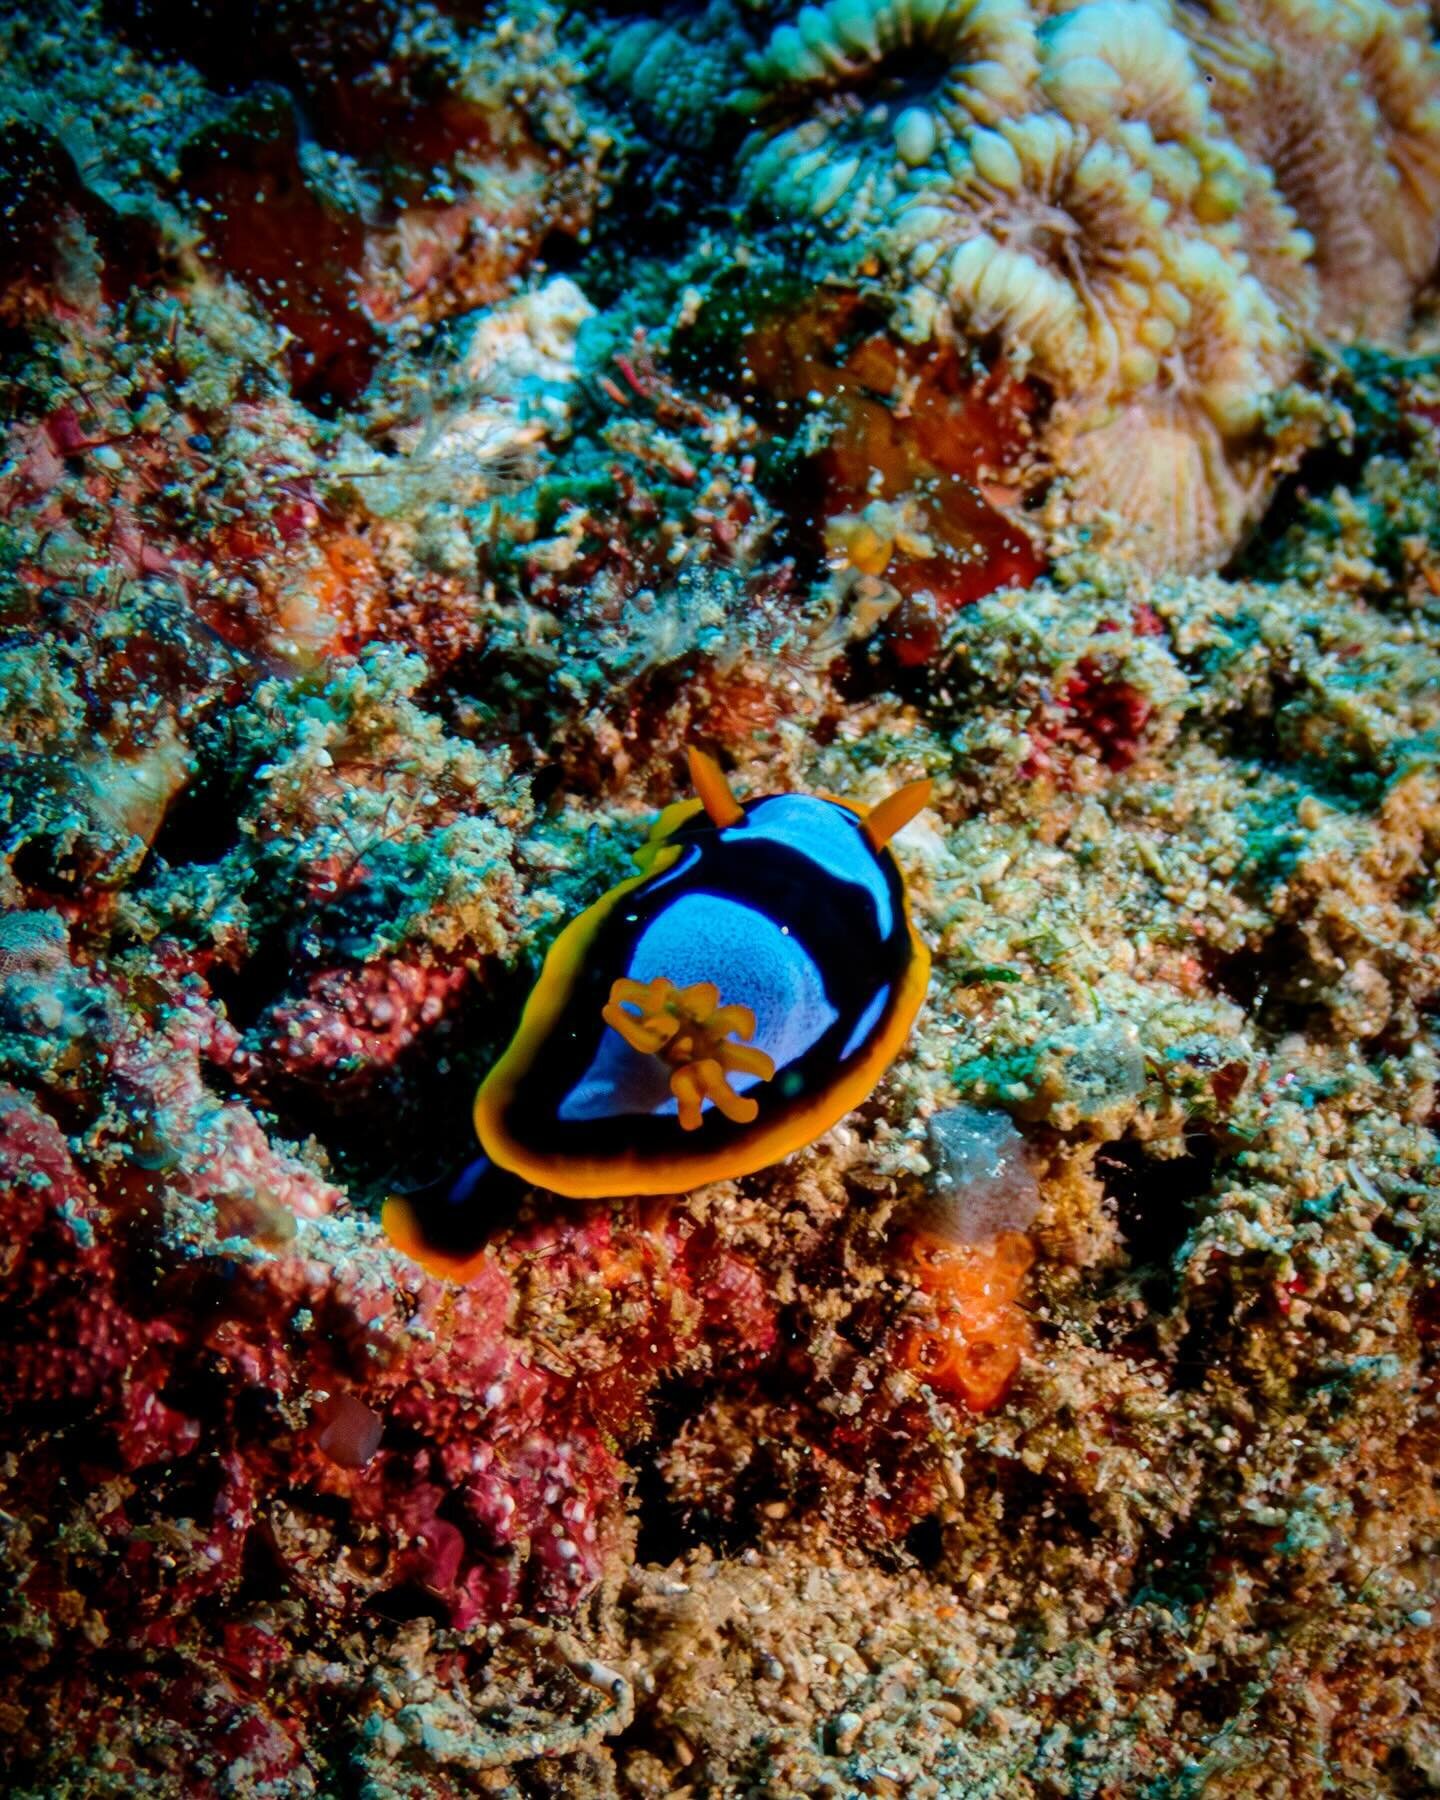 A menagerie of creatures encountered diving this year 🌊🐟
#australia #ningalooreef #bahamas #nassau #scuba 

#underwaterphotography #divesbigshotnudibranchs #divetravel #scubadiving #exmouth #padi #ocean #oceanlife #naturephotography #nature #sealov